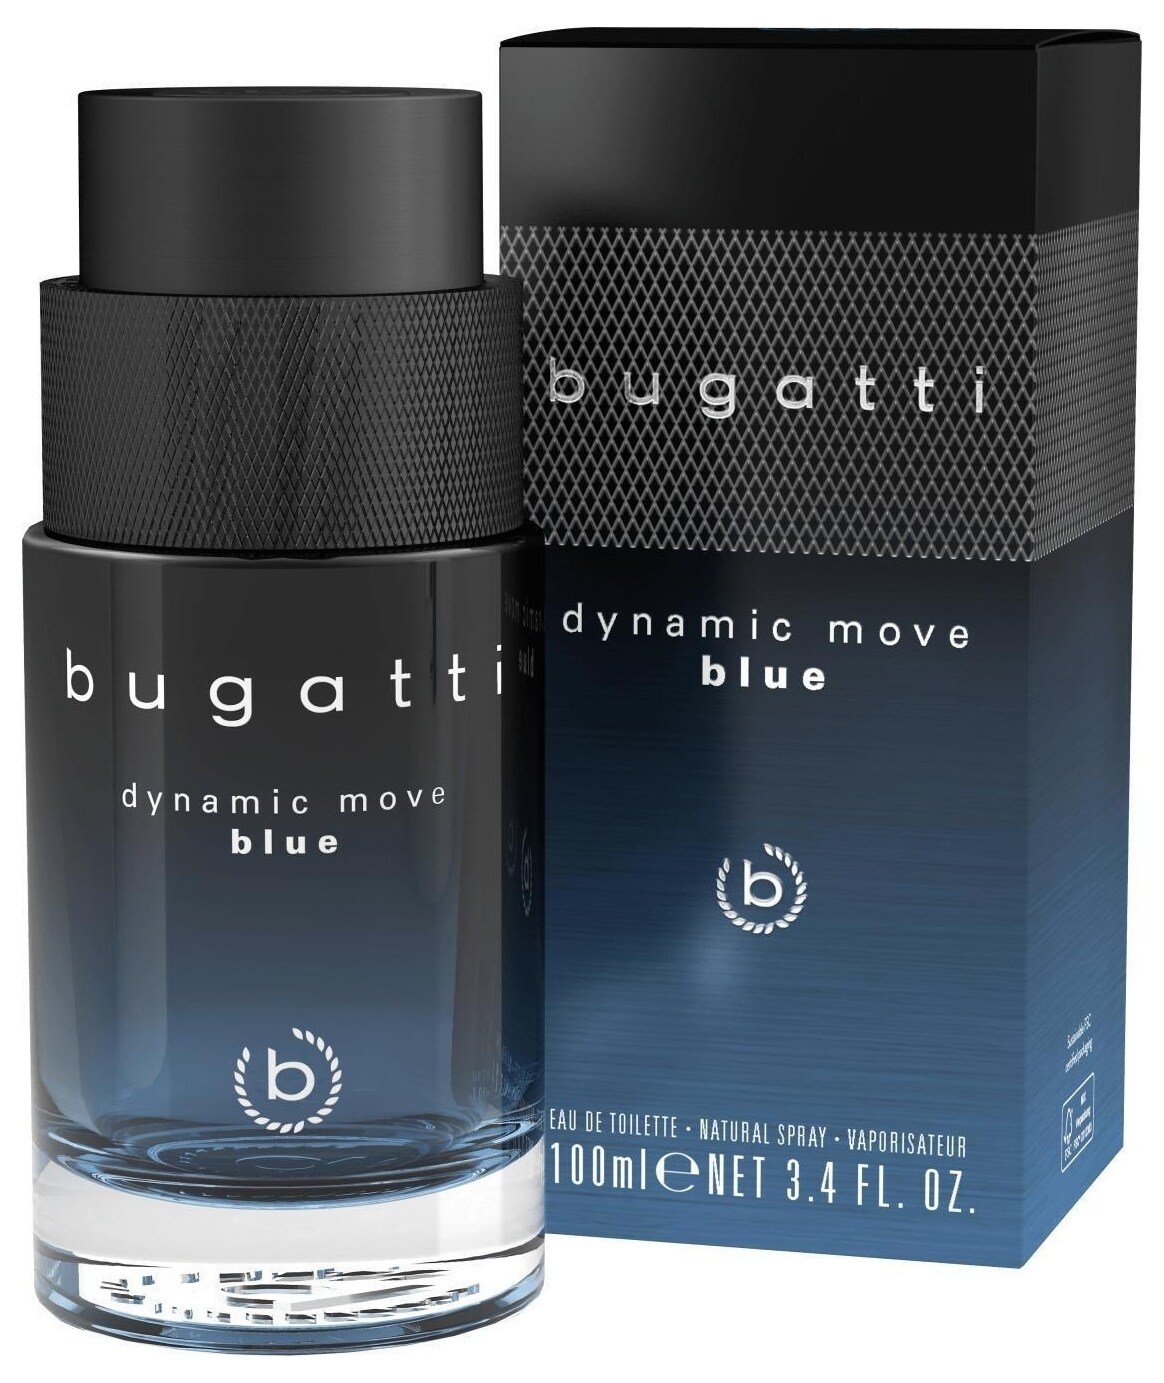 Blue bugatti Facts by Move Reviews » Perfume & Fashion Dynamic